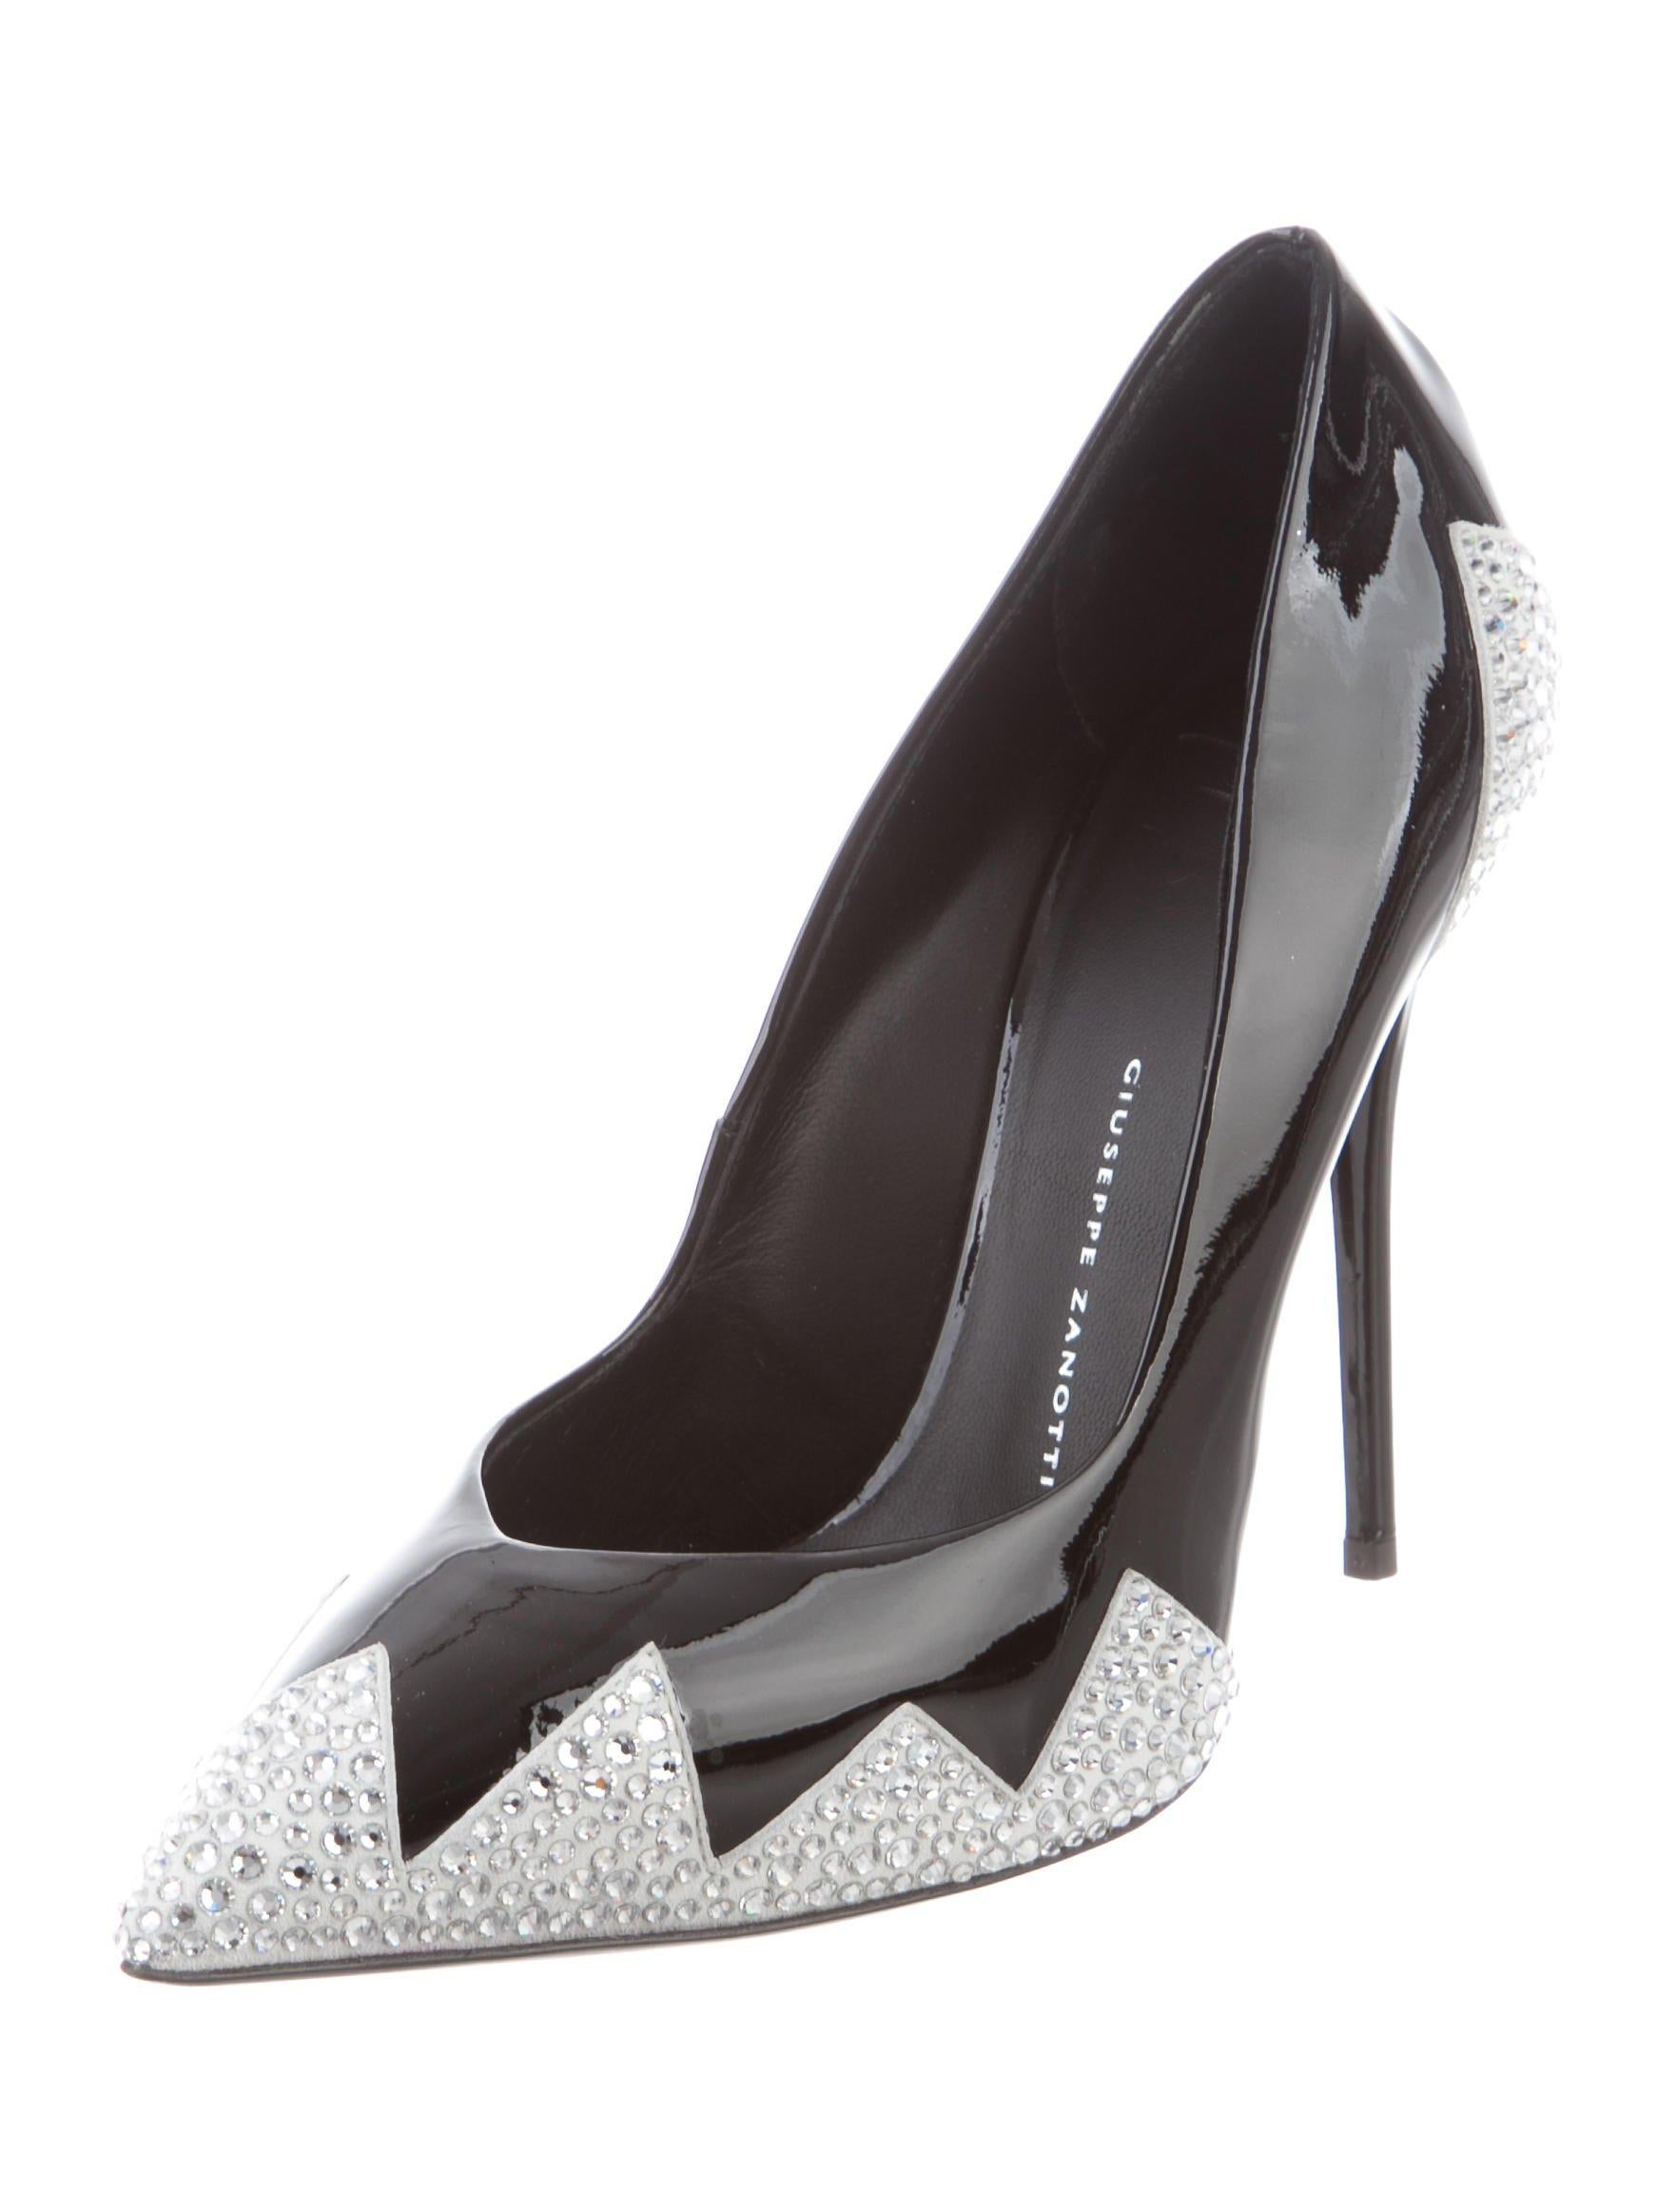 Women's Giuseppe Zanotti NEW Black Patent Leather Crystal Retro Evening Pumps Heels